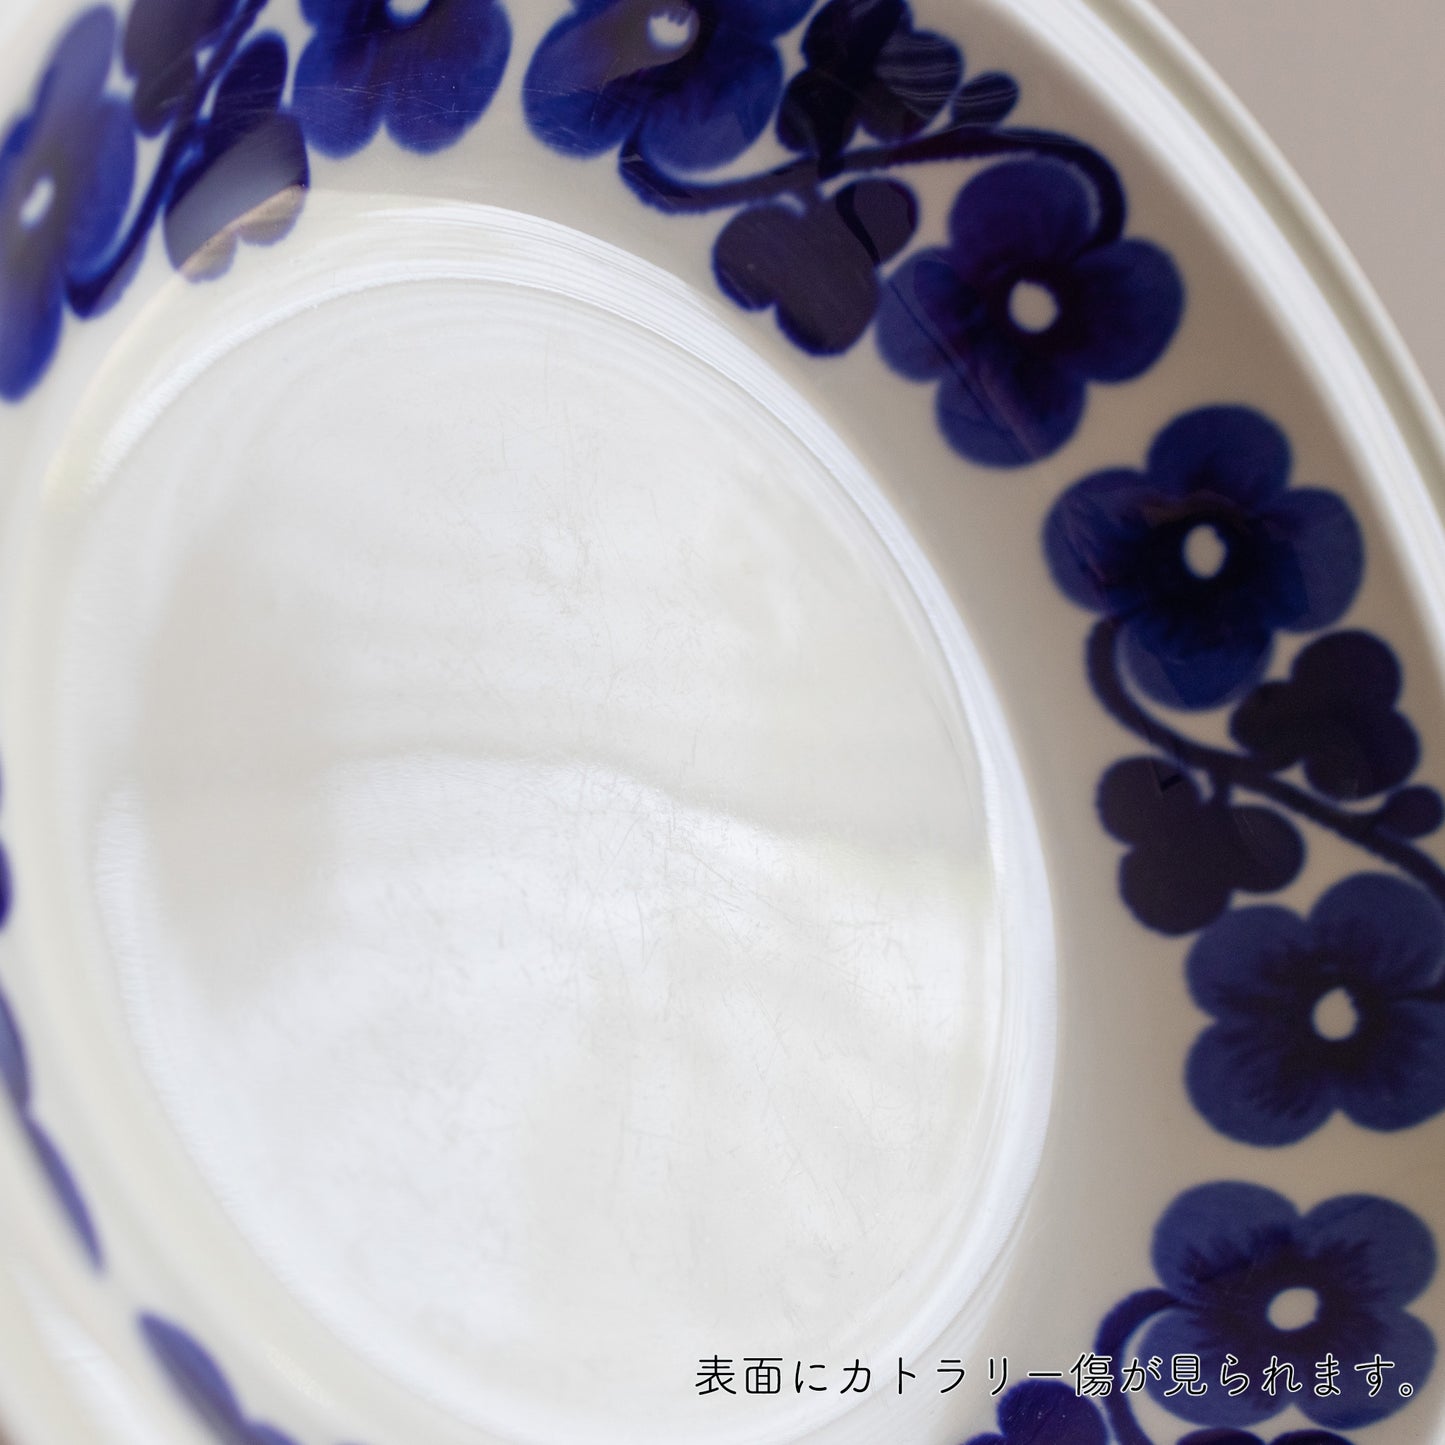 aamu (アアム) bowl 19.0cm / arabia (アラビア)